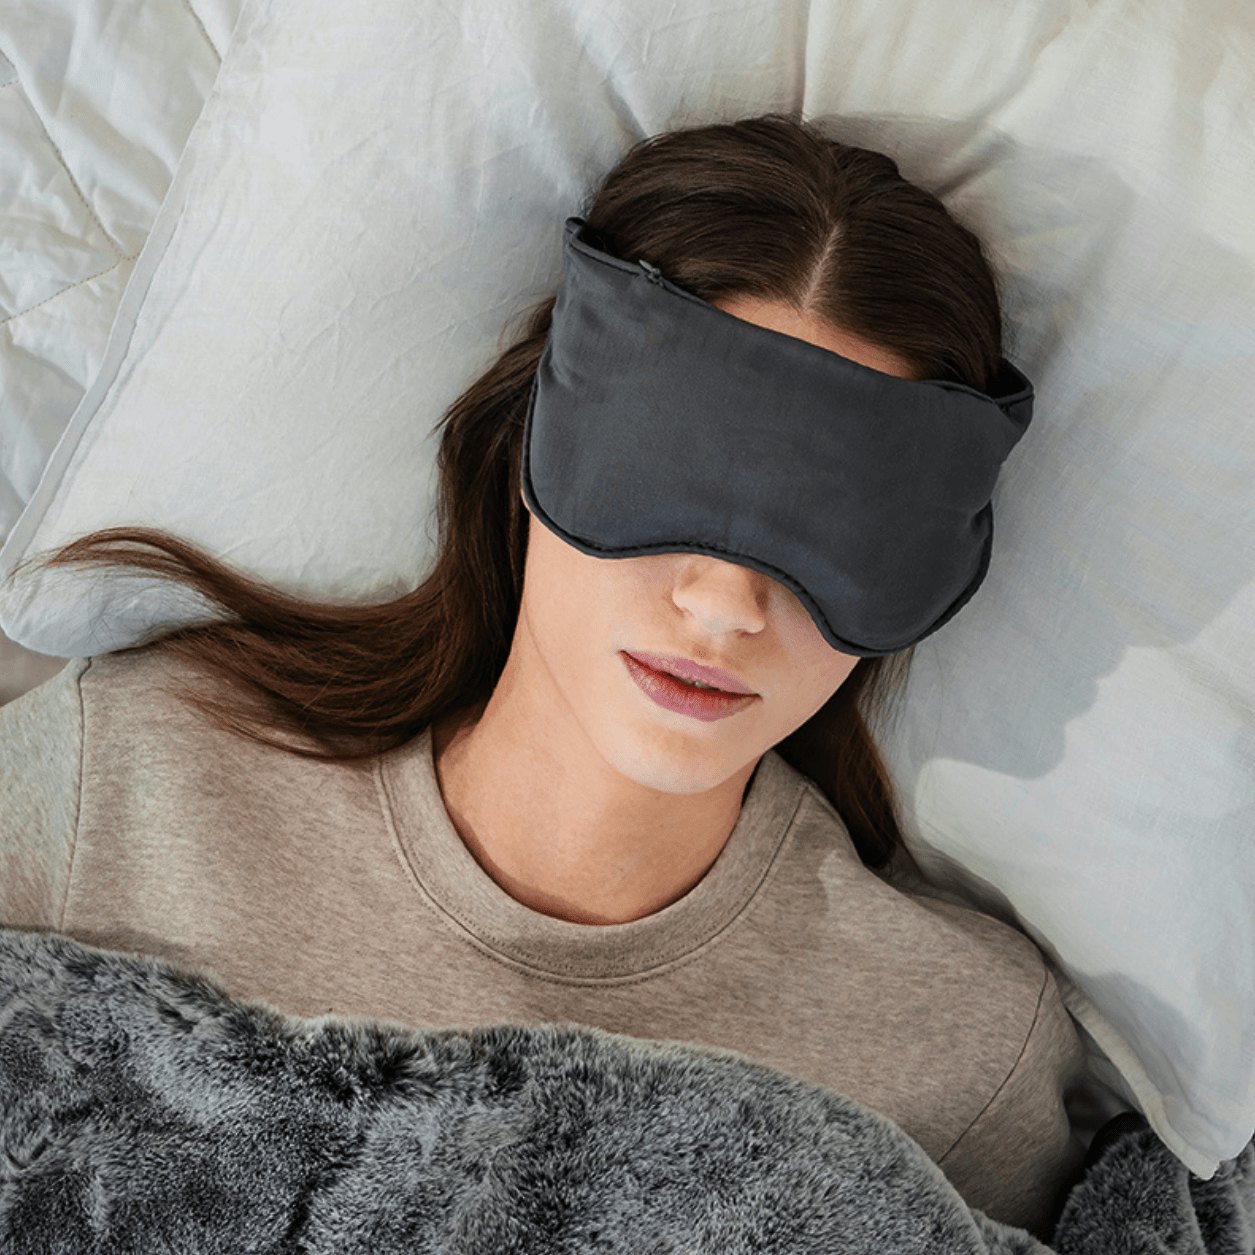 Breathable Sleeping Eyes Mask, Cool Feeling Eye Sleep Cover for